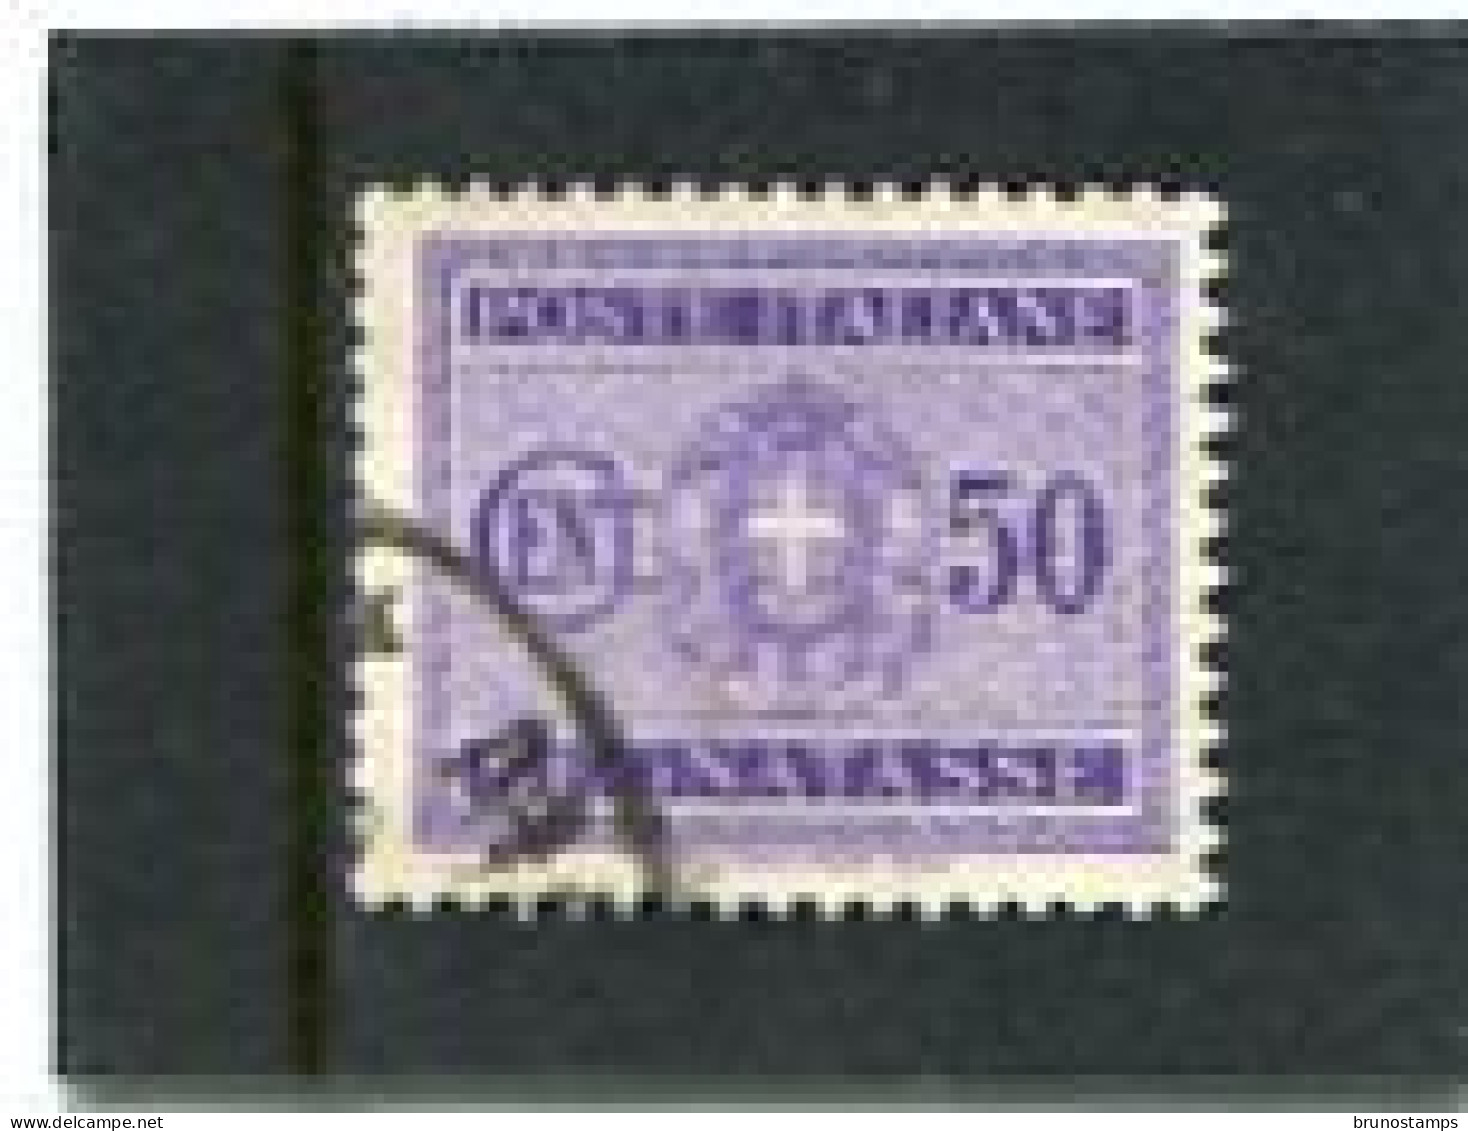 ITALY/ITALIA - 1934  POSTAGE DUE  50c  FINE USED - Segnatasse